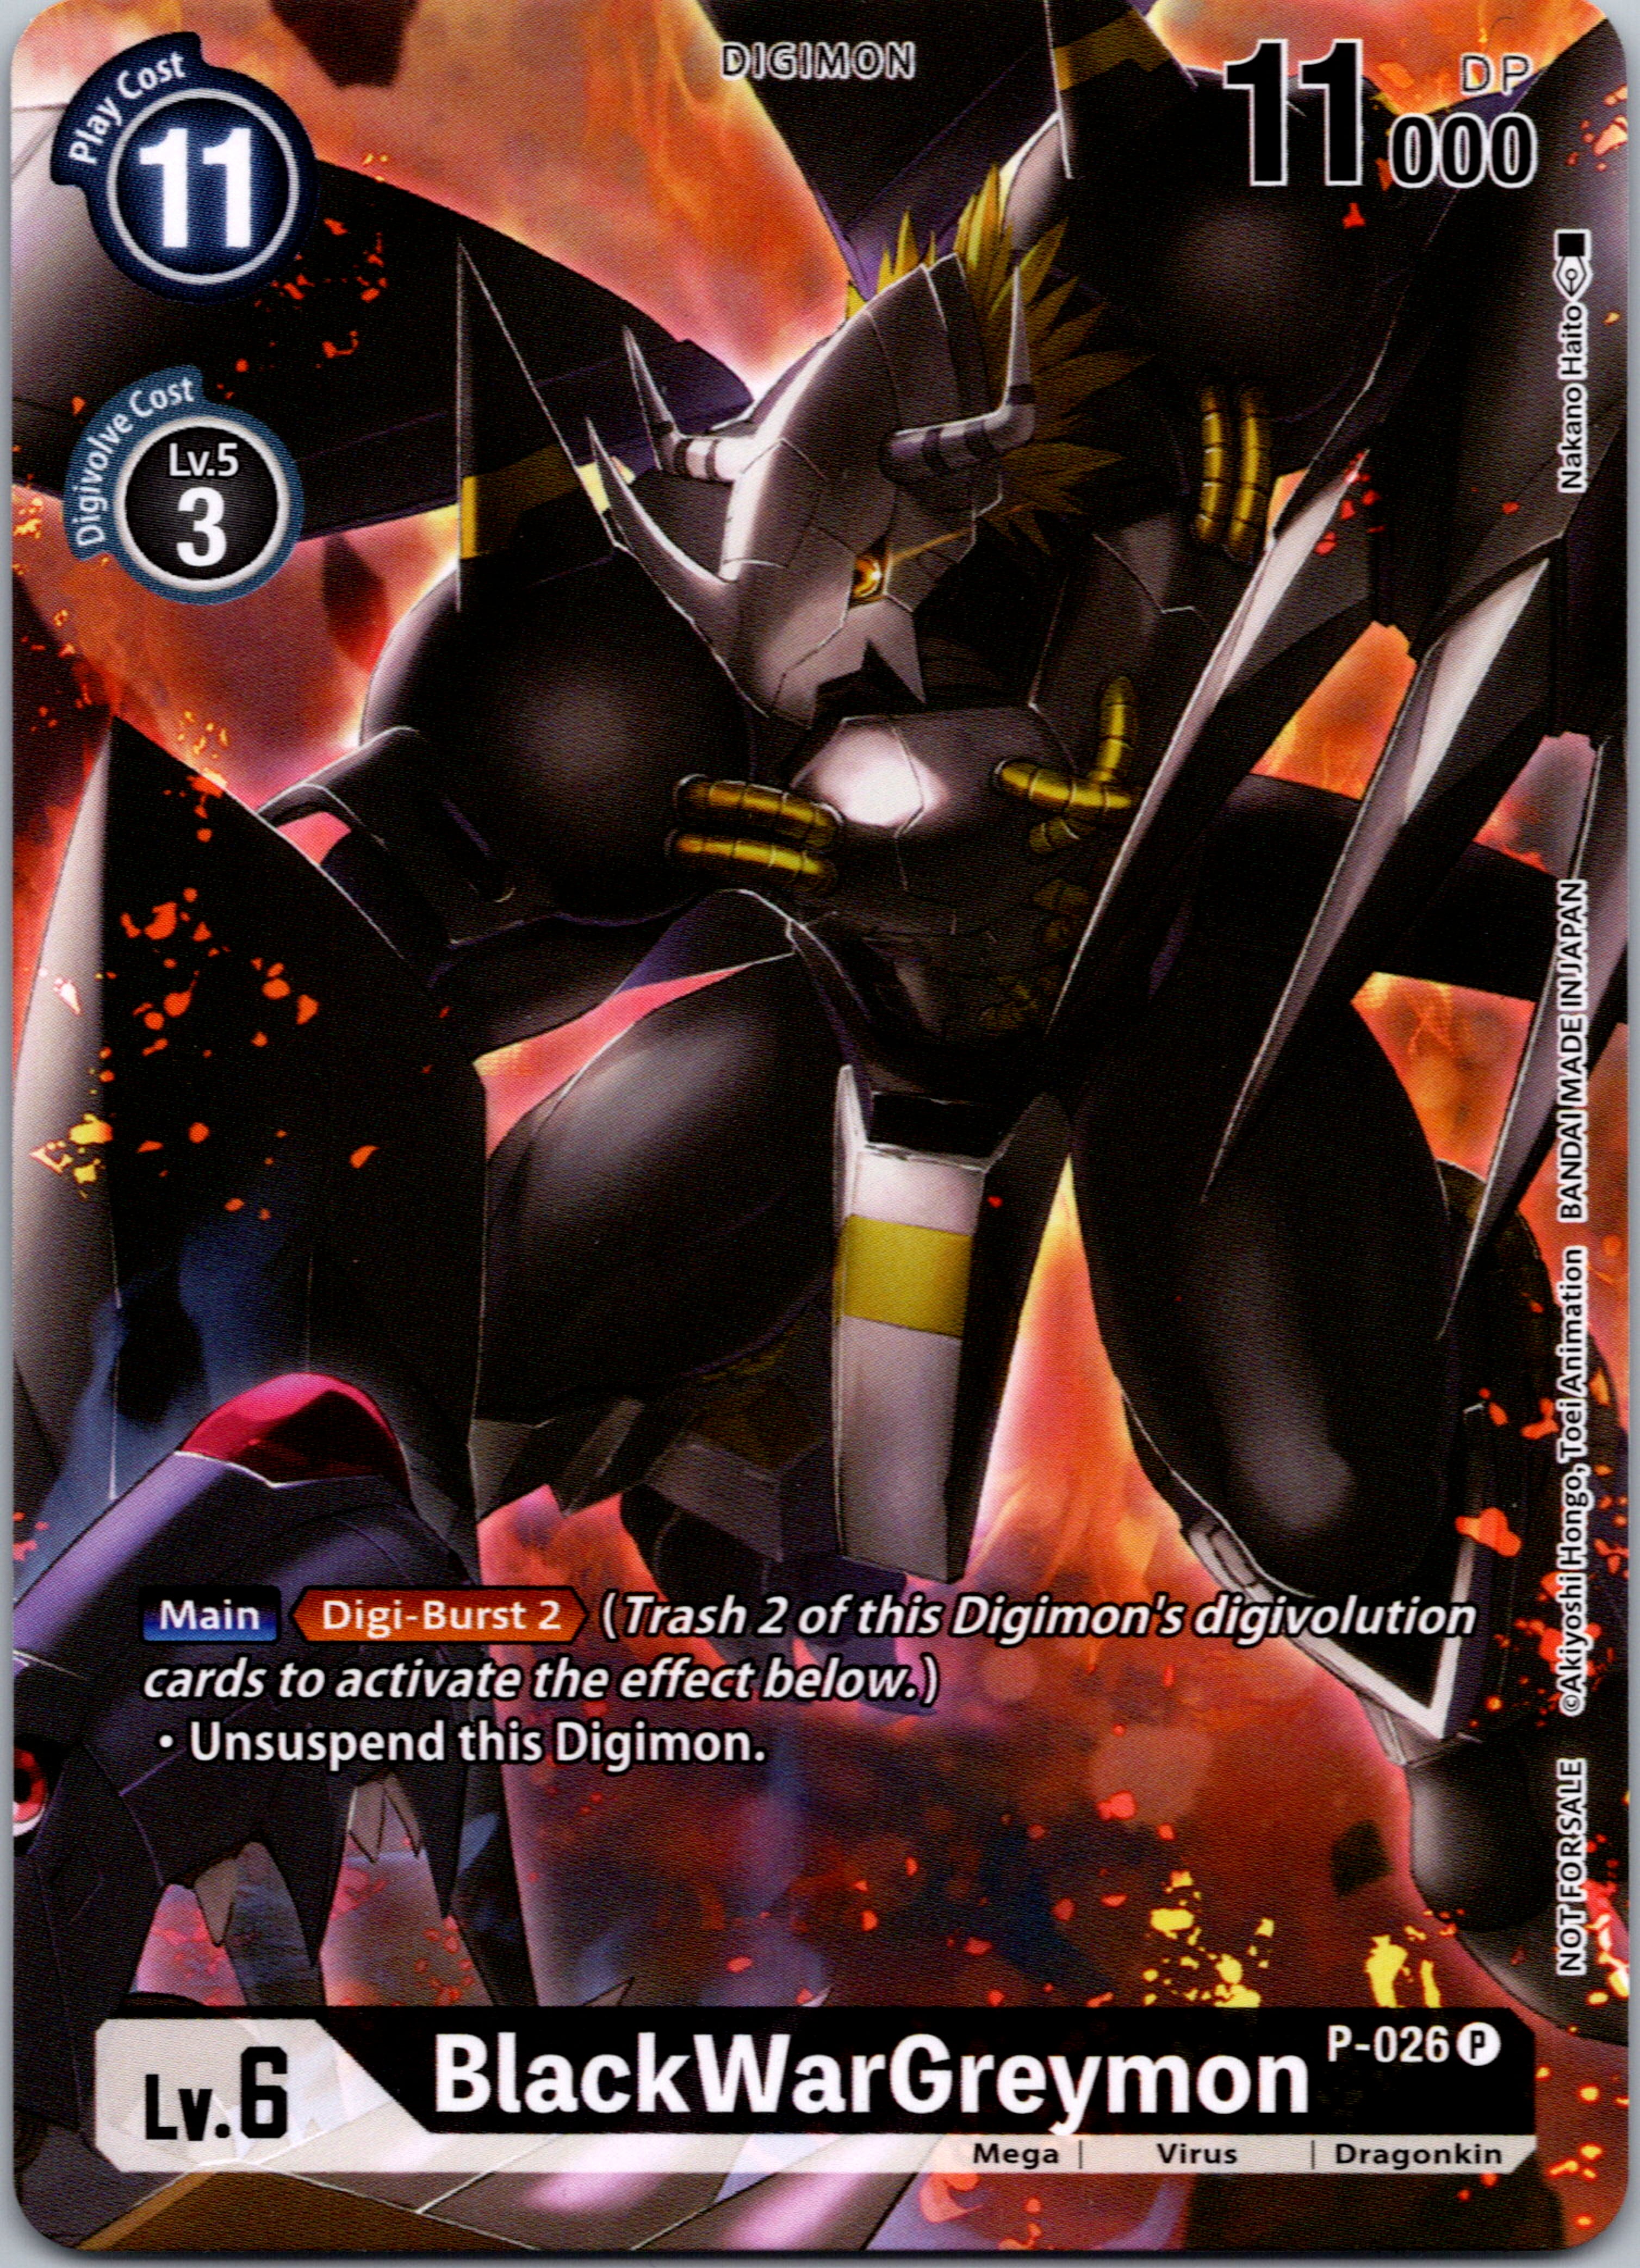 BlackWarGreymon - P-026 (Winner Pack Across Time) [P-026] [Digimon Promotion Cards] Normal